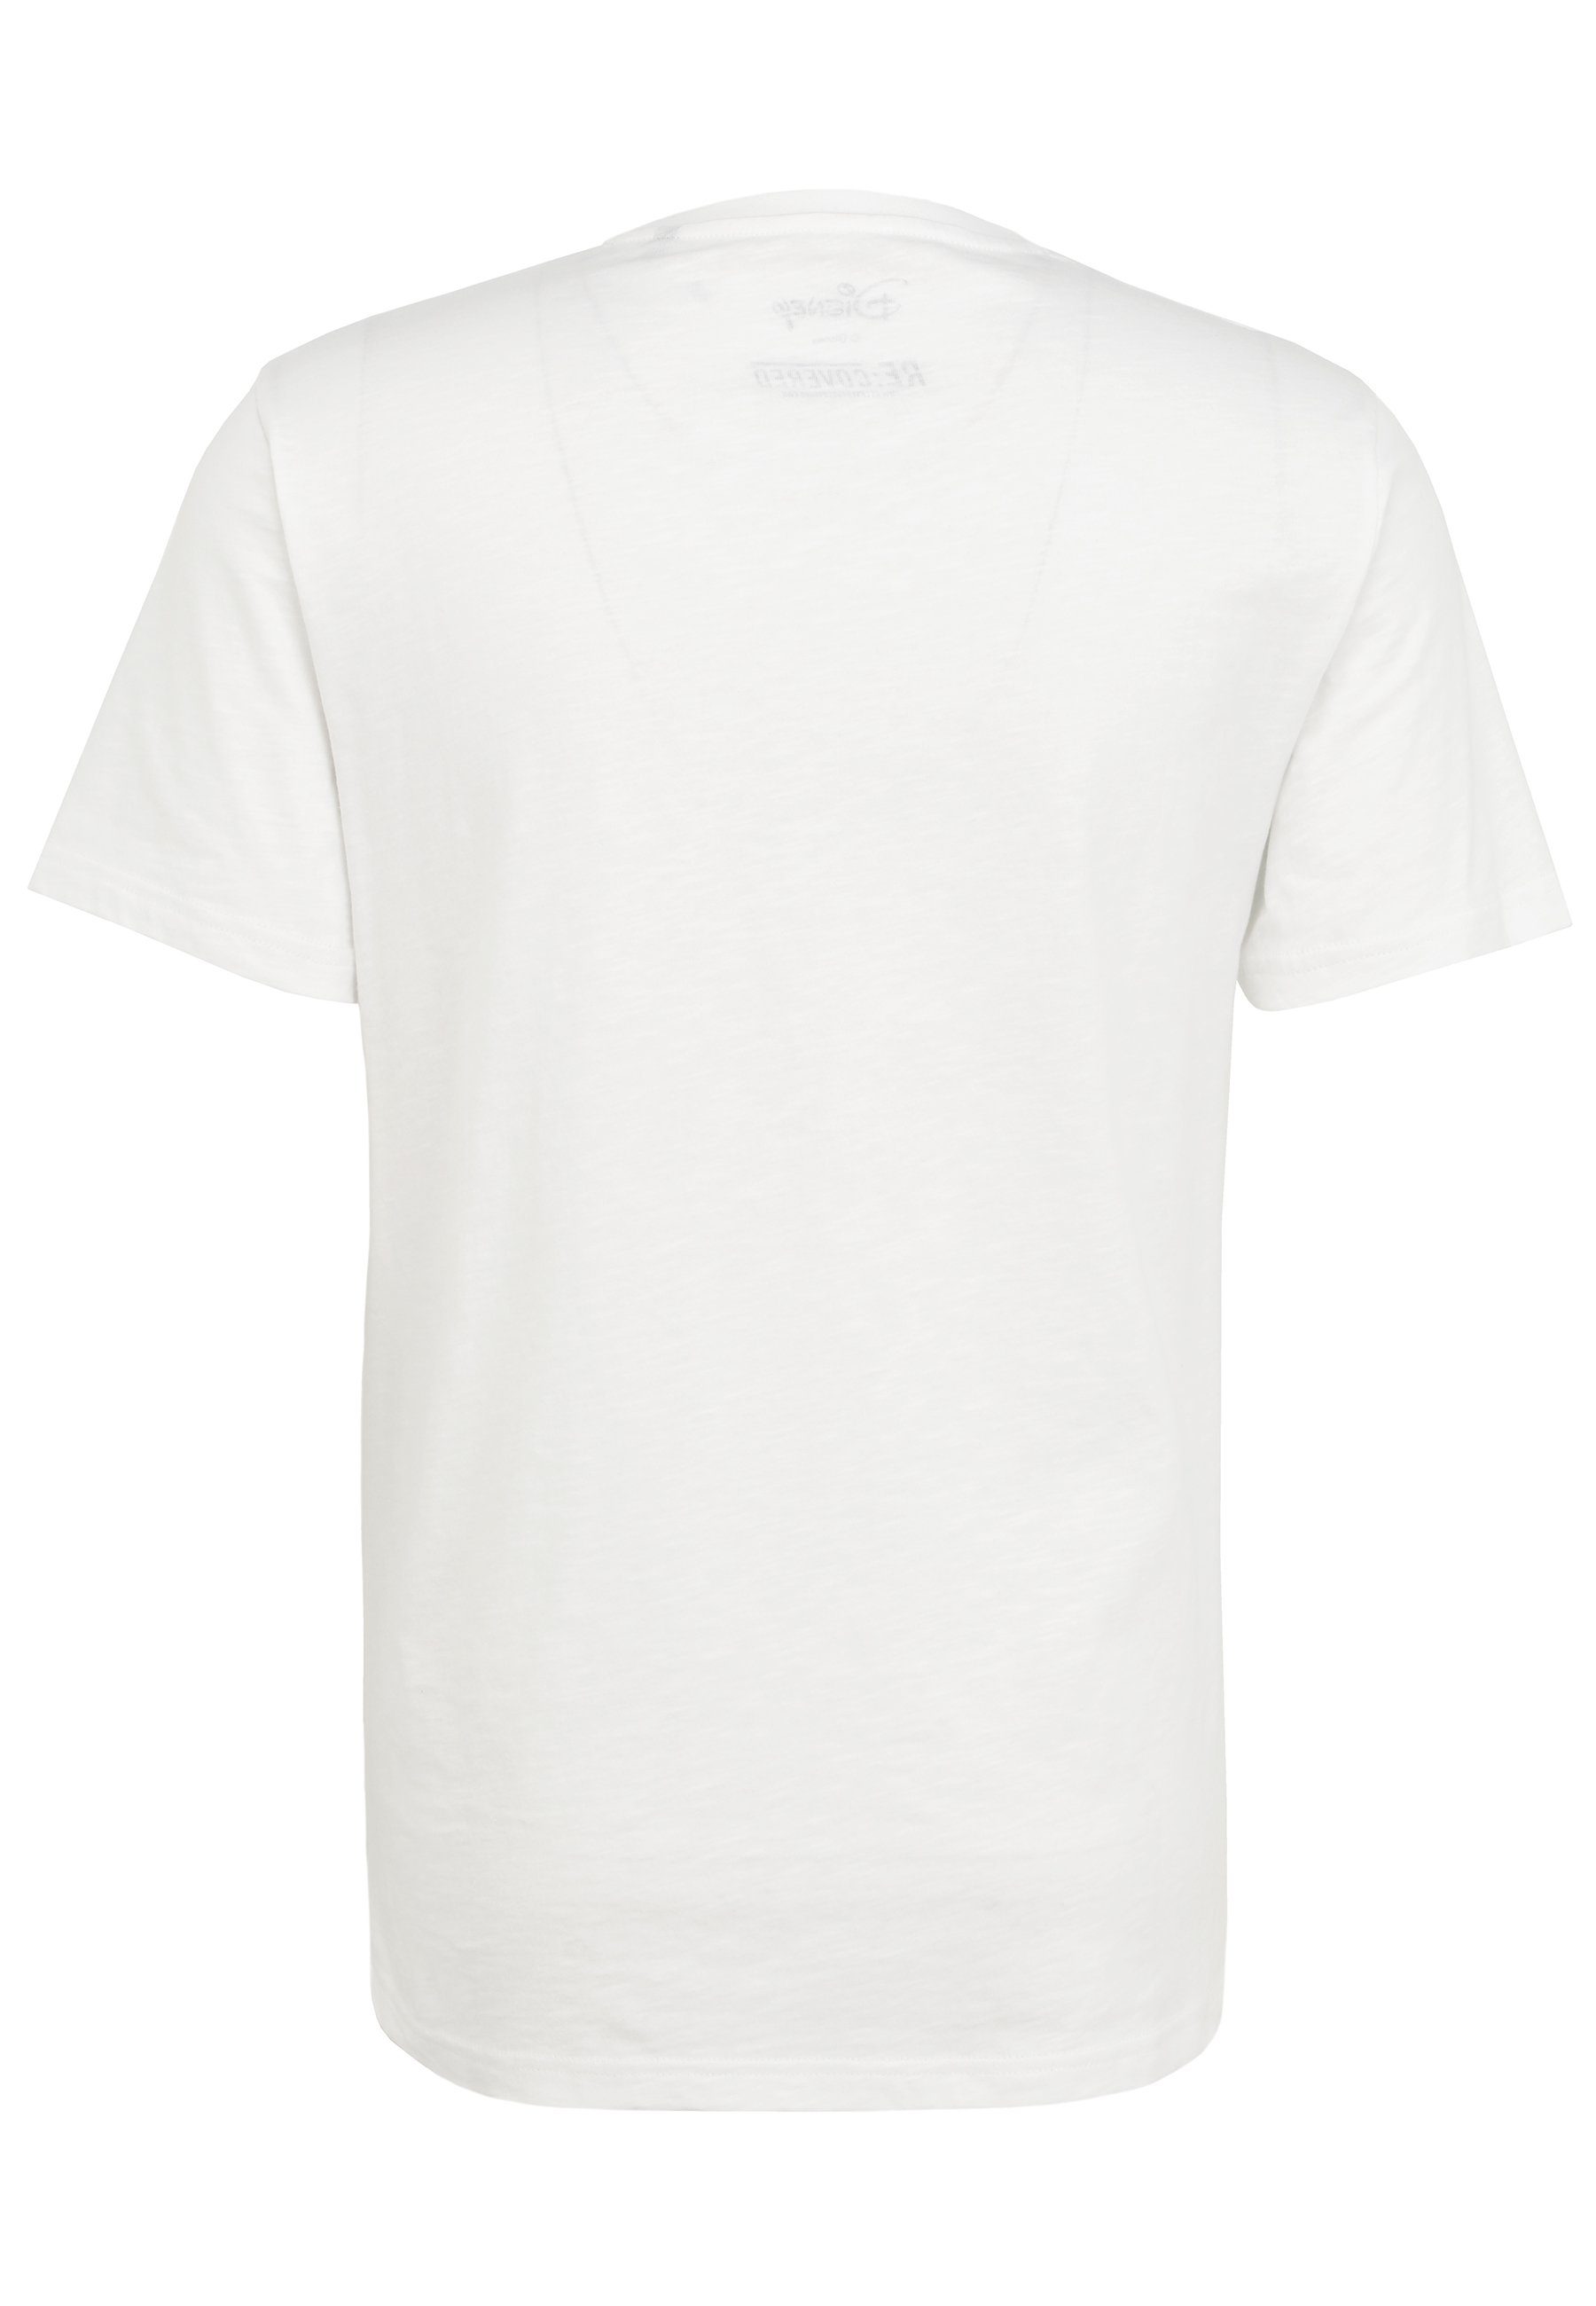 Model GOTS Wars Millennium Falcon Star T-Shirt Bio-Baumwolle Recovered zertifizierte